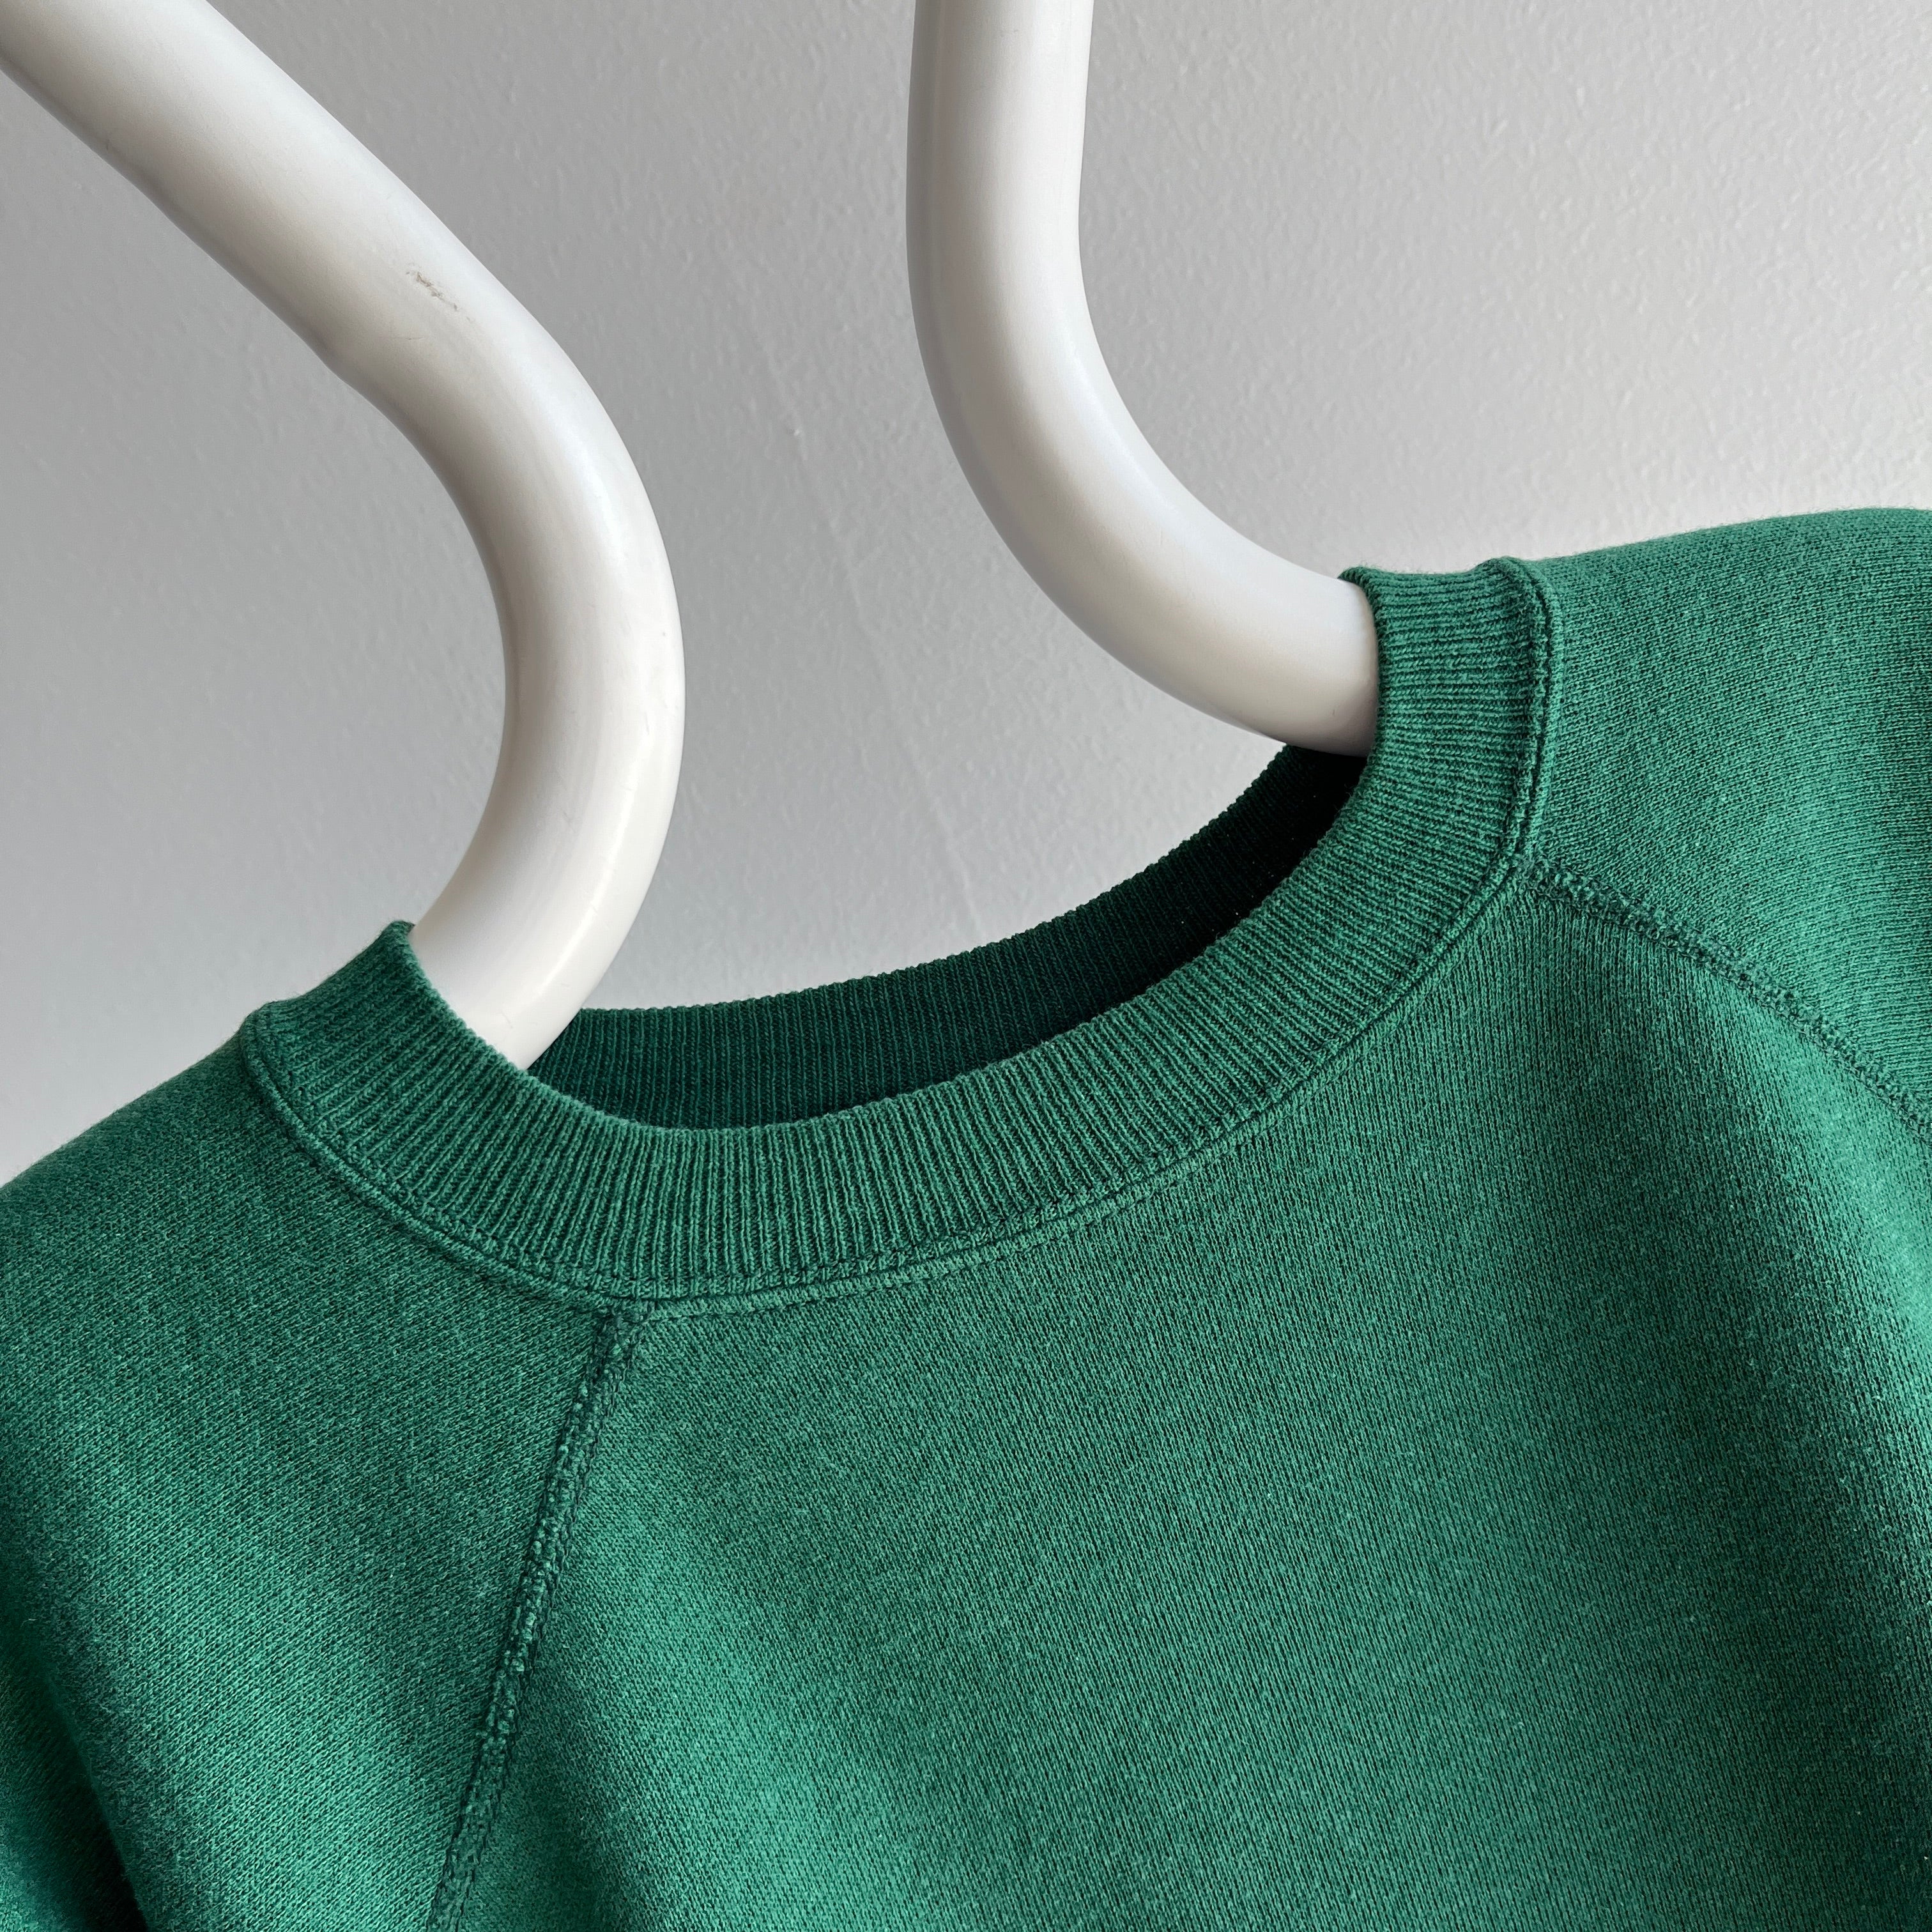 1980s White Spruce Green Raglan Sweatshirt - A Keeper!